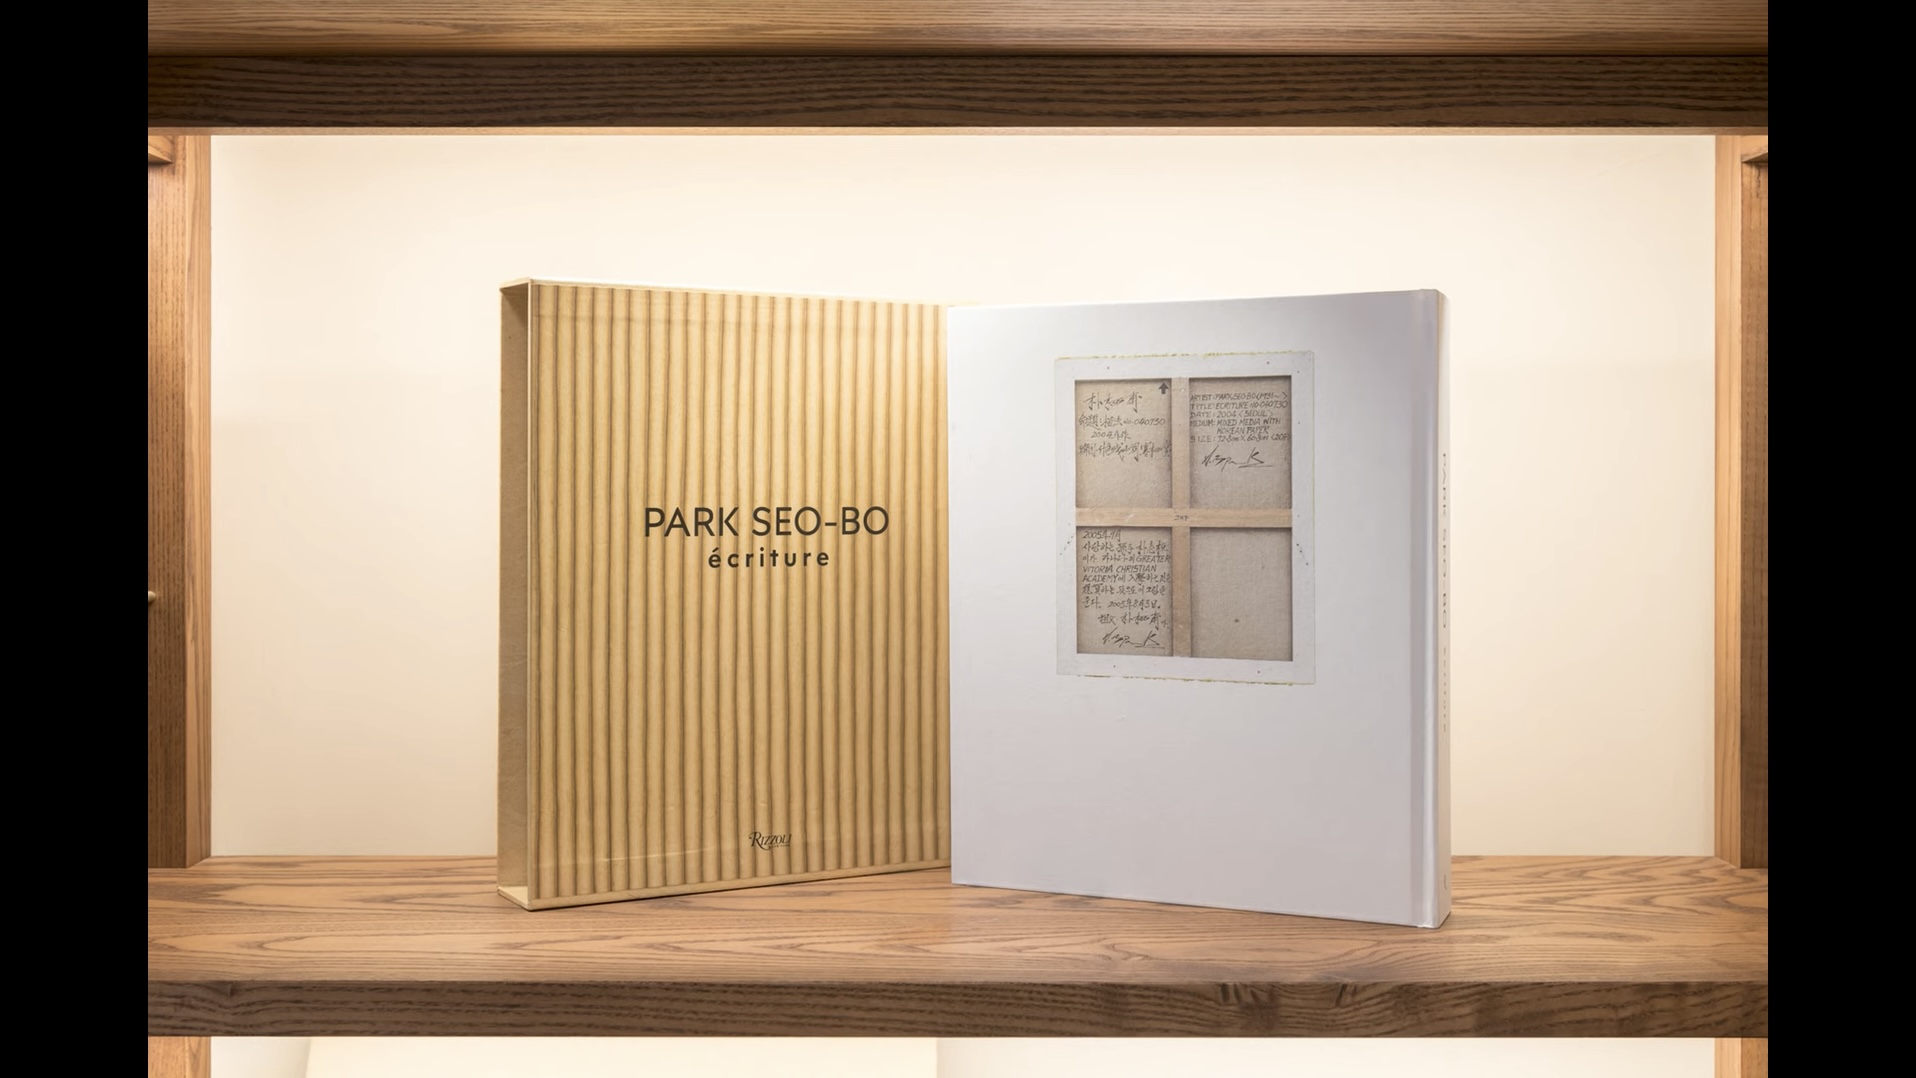 Park Seo-Bo, 'PARK SEO-BO' at Kukje Gallery, Seoul, South Korea on 15  Sep–31 Oct 2021